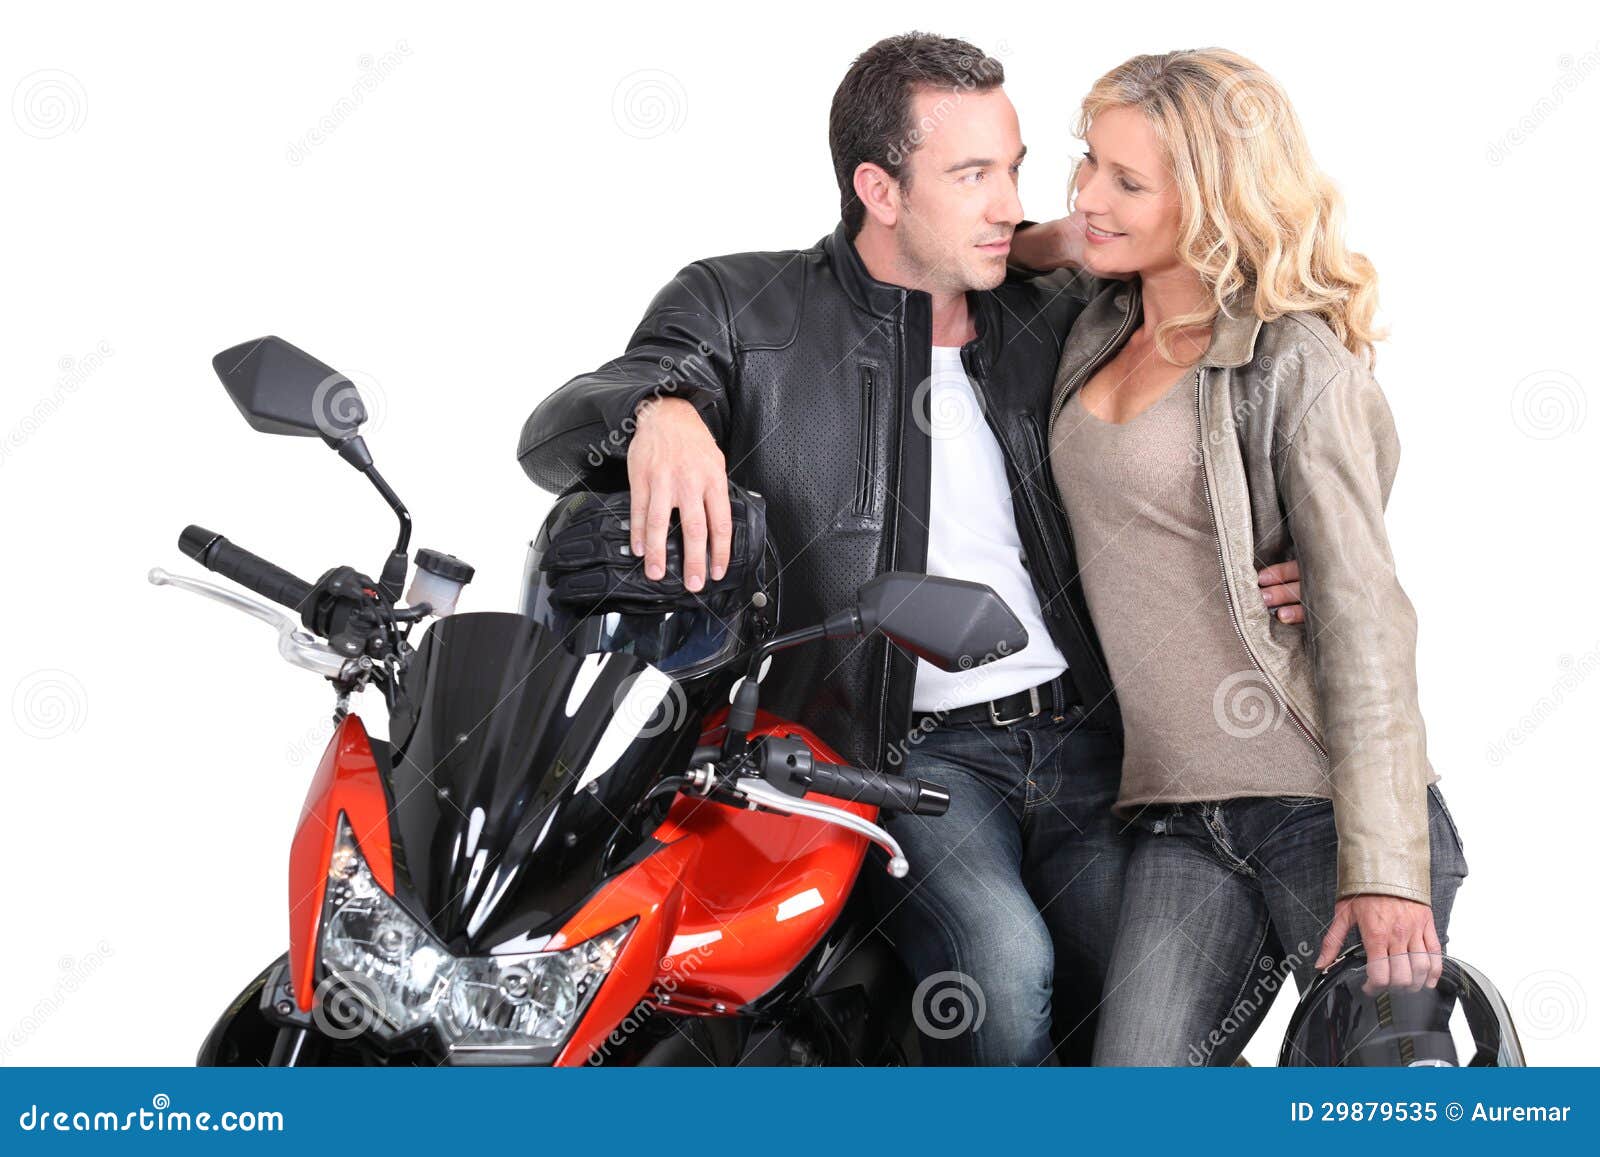 arvind rajput add photo woman riding man sexually